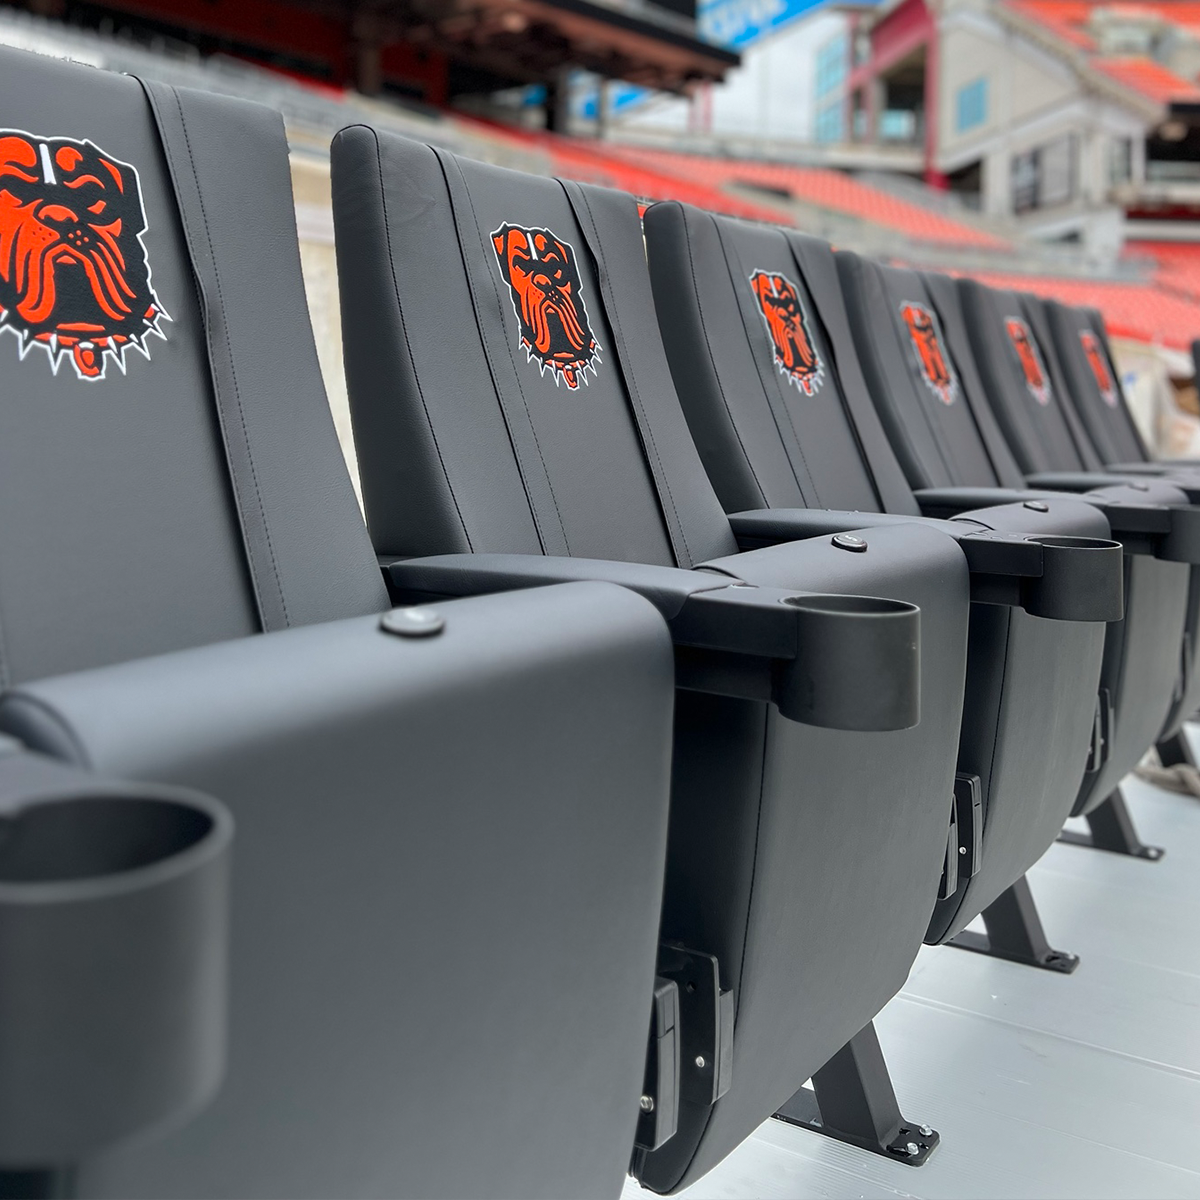 SuiteMax 3.5 VIP Seats with Toronto Raptors Alternate 2019 Champions Logo